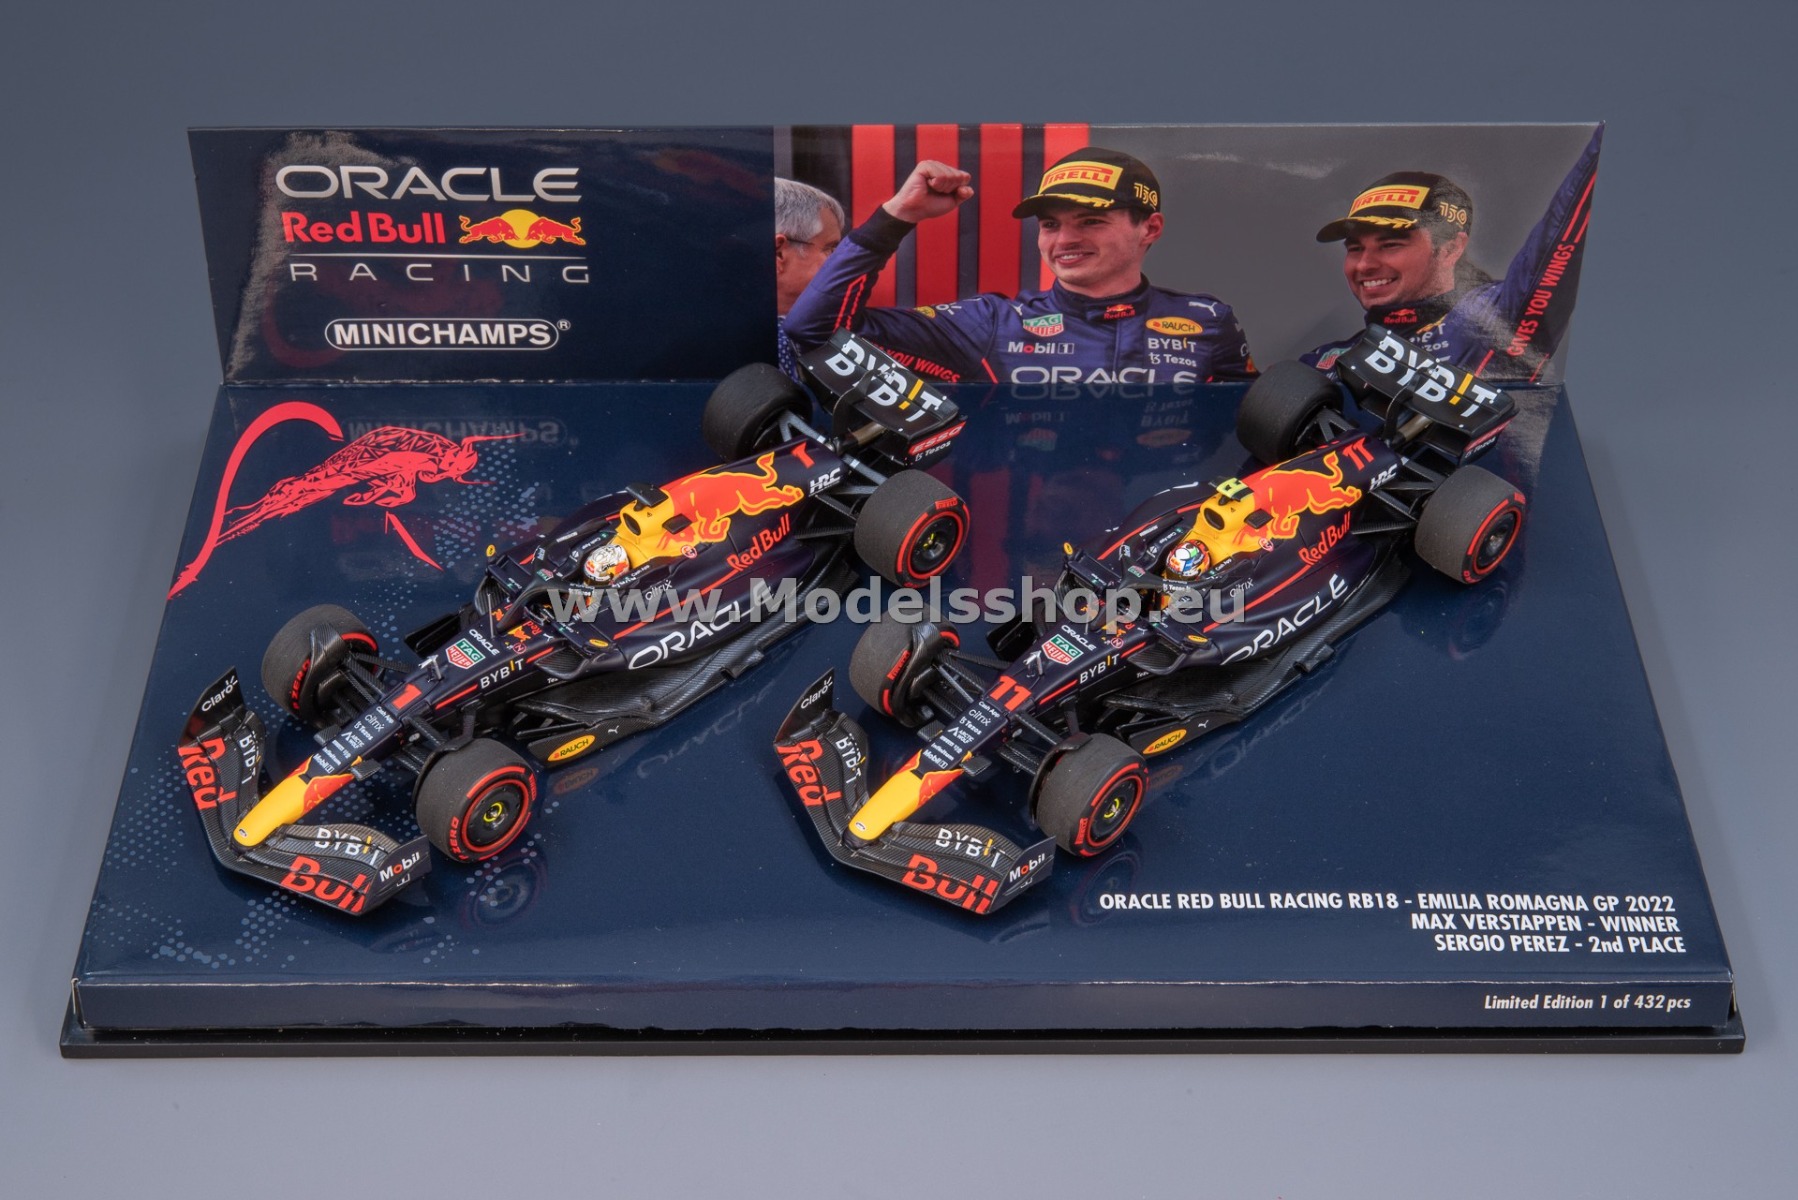 Minichamps 472224111 2-car set - Oracle Red Bull Racing RB18 - 1-2 Finish Verstappen/Perez - Emilia RomanaGP 2022